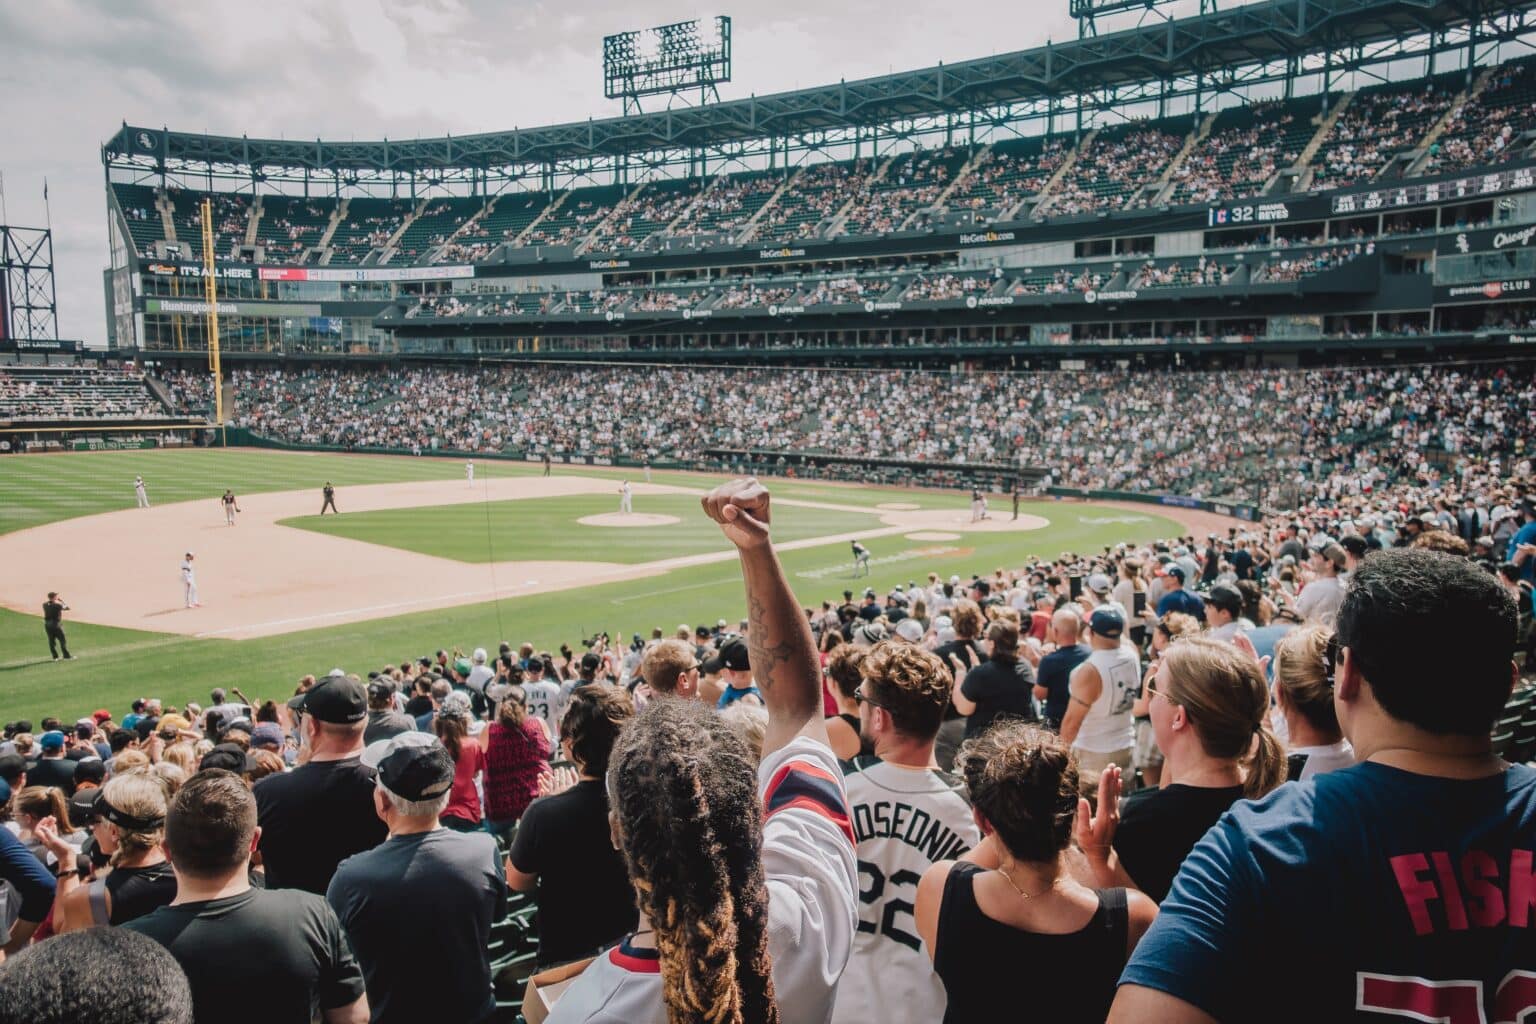 Large crowd cheering at a baseball game.